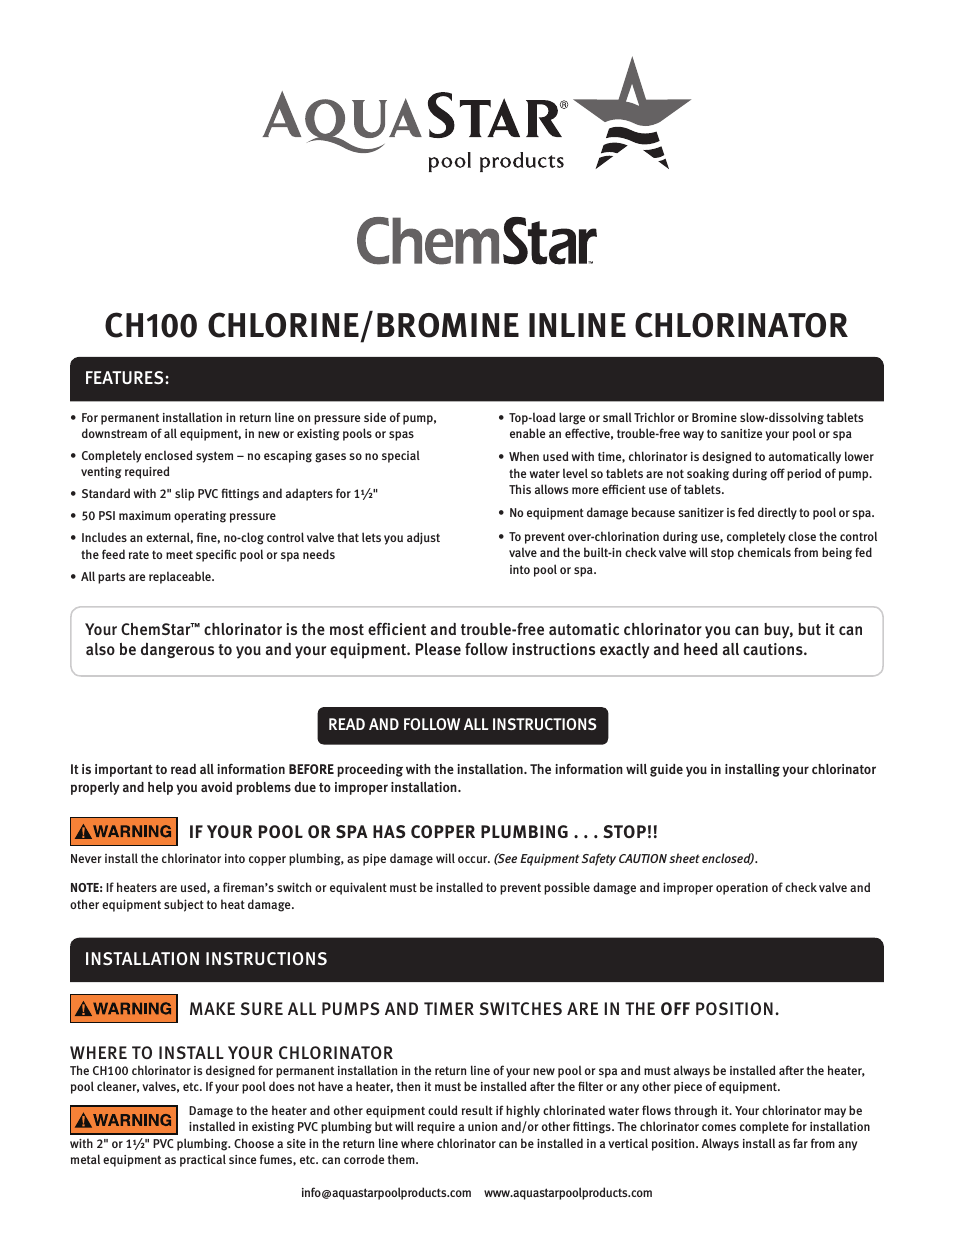 ChemStar On-line Chlorinator